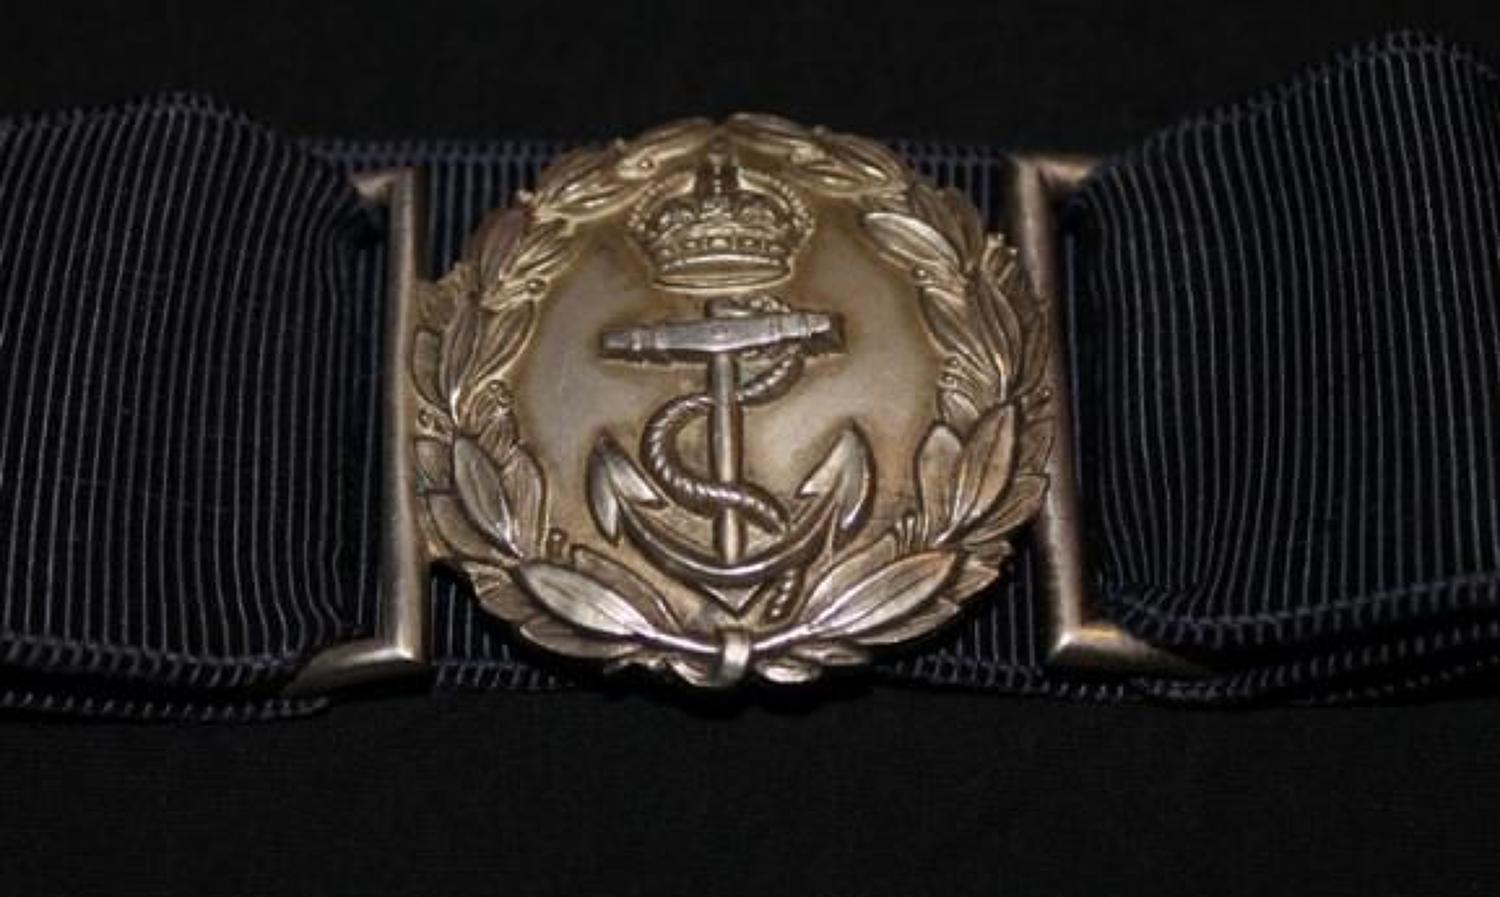 Royal Naval Dress Belt